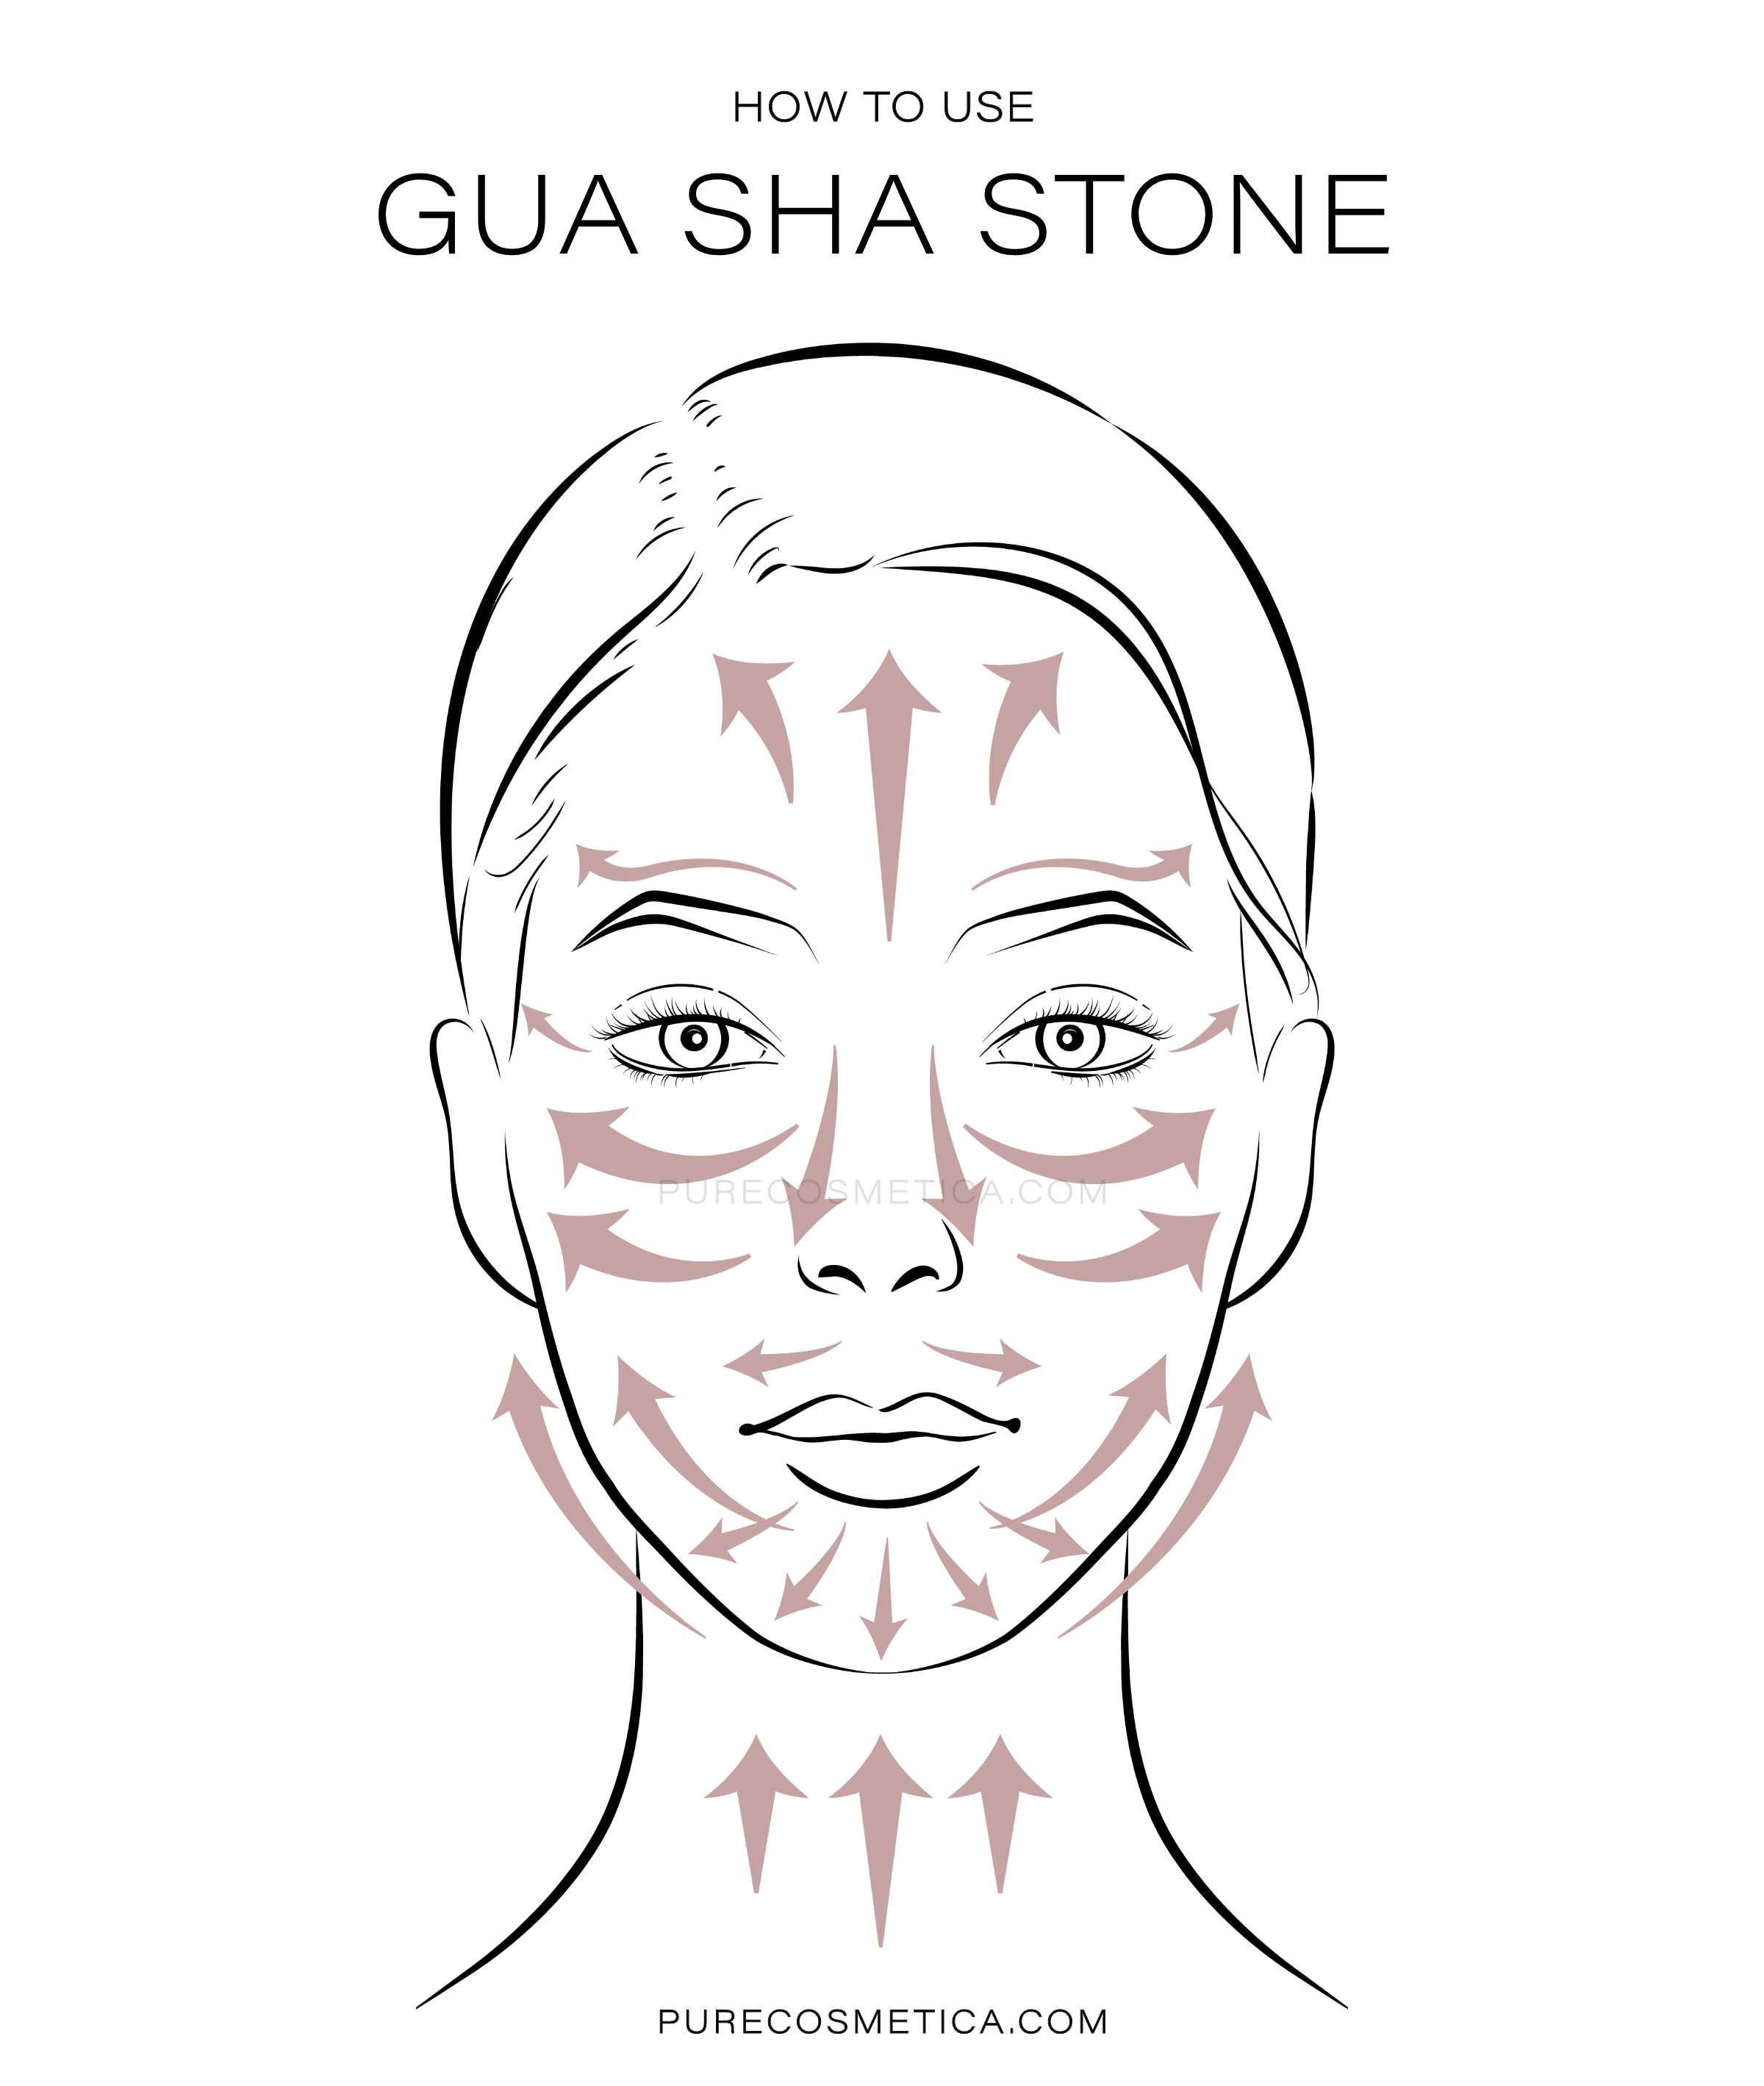 How to use a gua sha stone